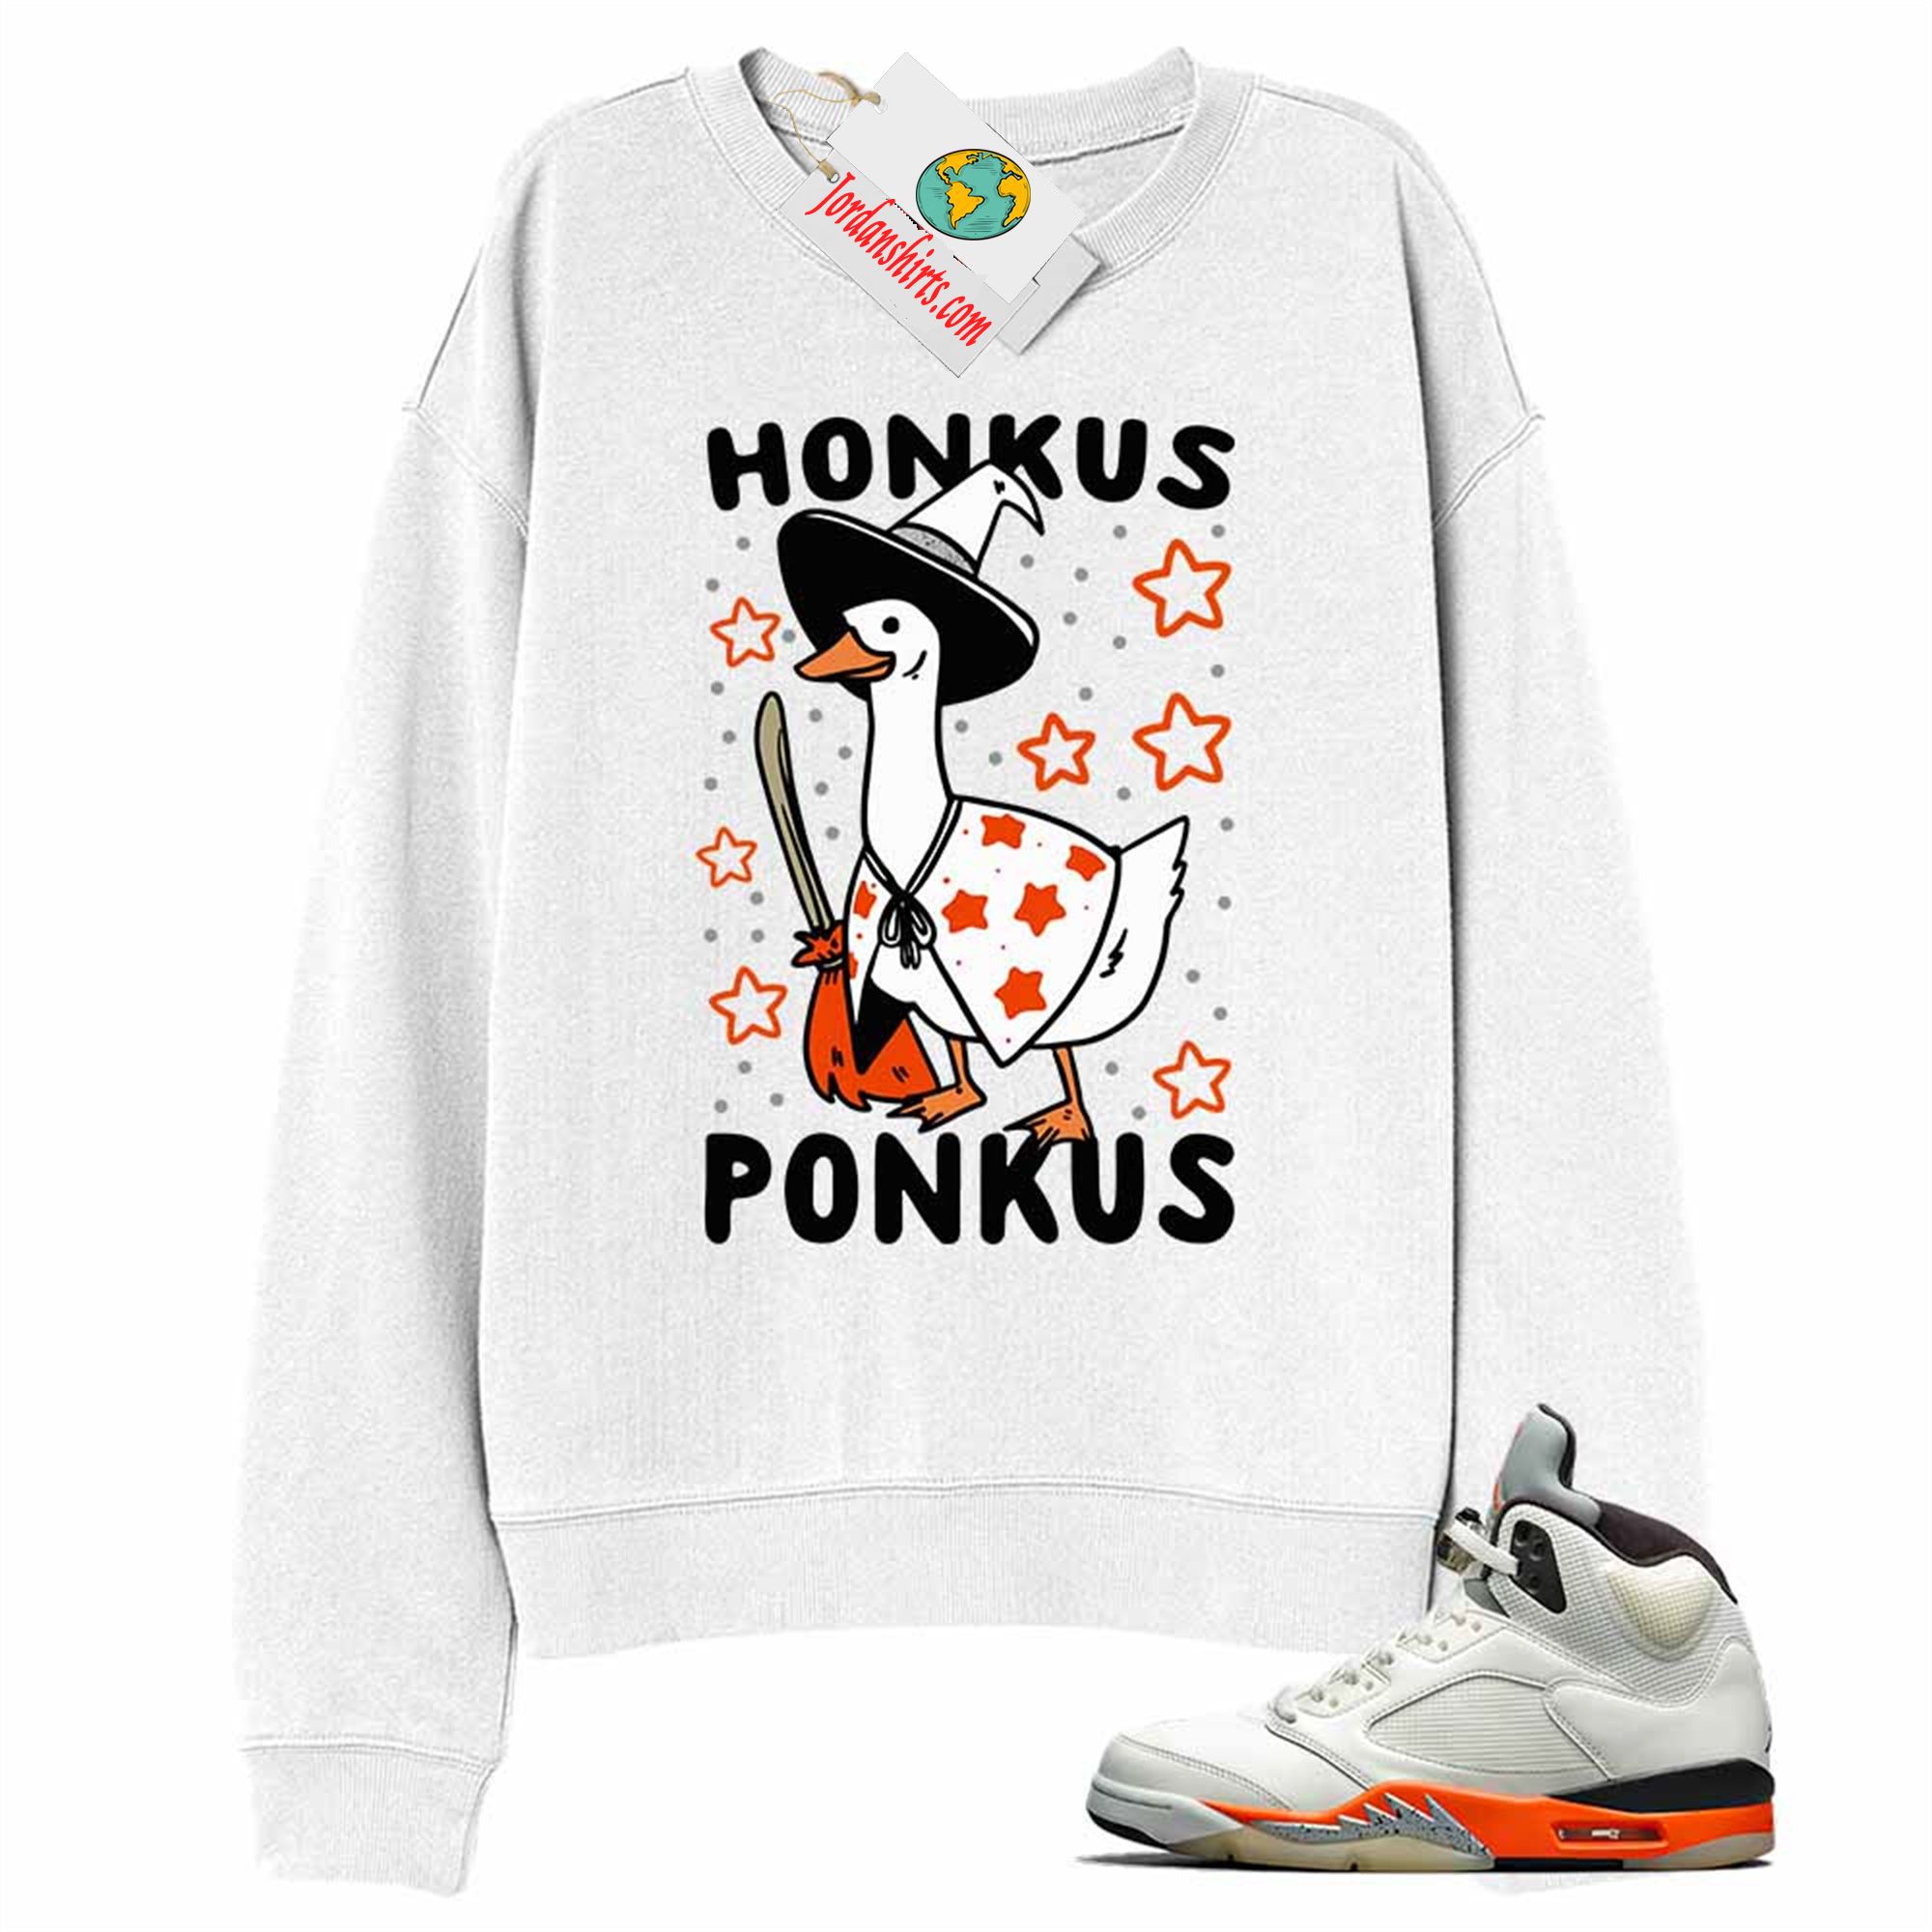 Jordan 5 Sweatshirt, Witches Duck Honkus Ponkus White Sweatshirt Air Jordan 5 Orange Blaze Shattered Backboard 5s Size Up To 5xl